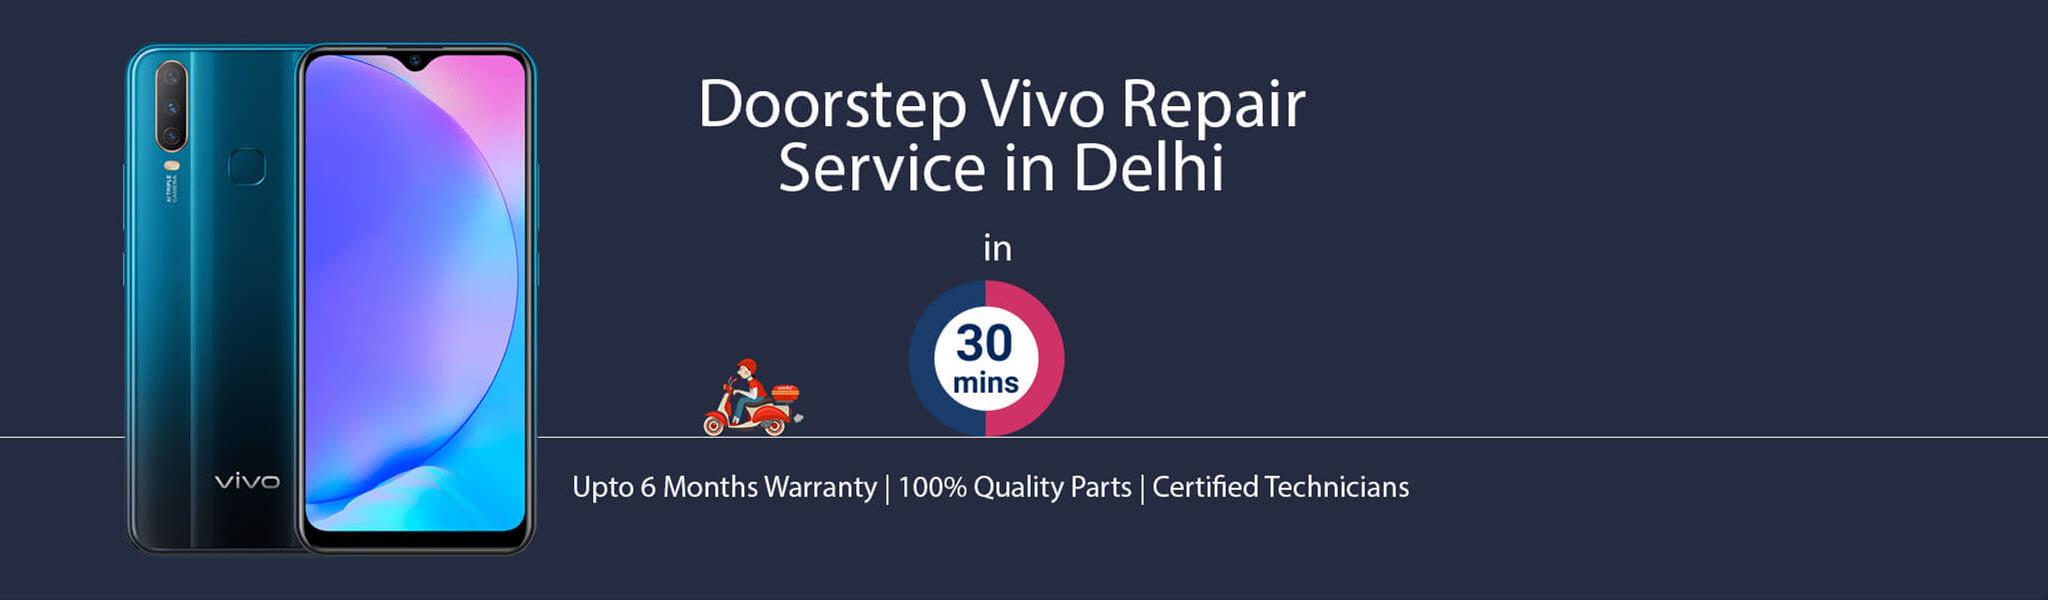 vivo-repair-service-banner-delhi.jpg